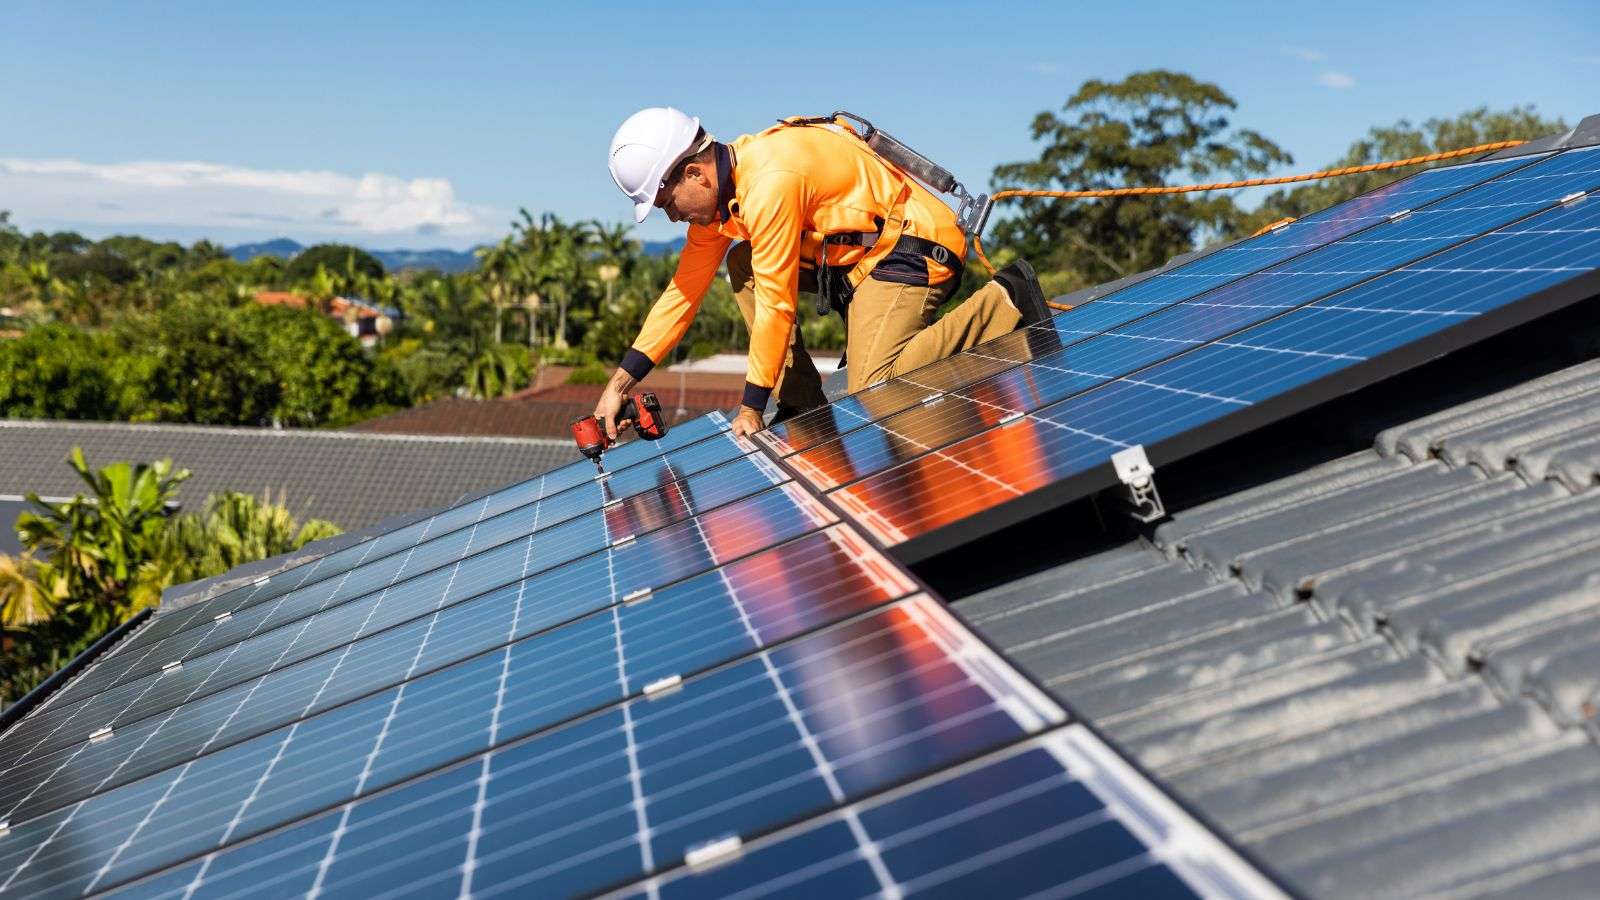 solar roof panels cost - bighomeprojects.com